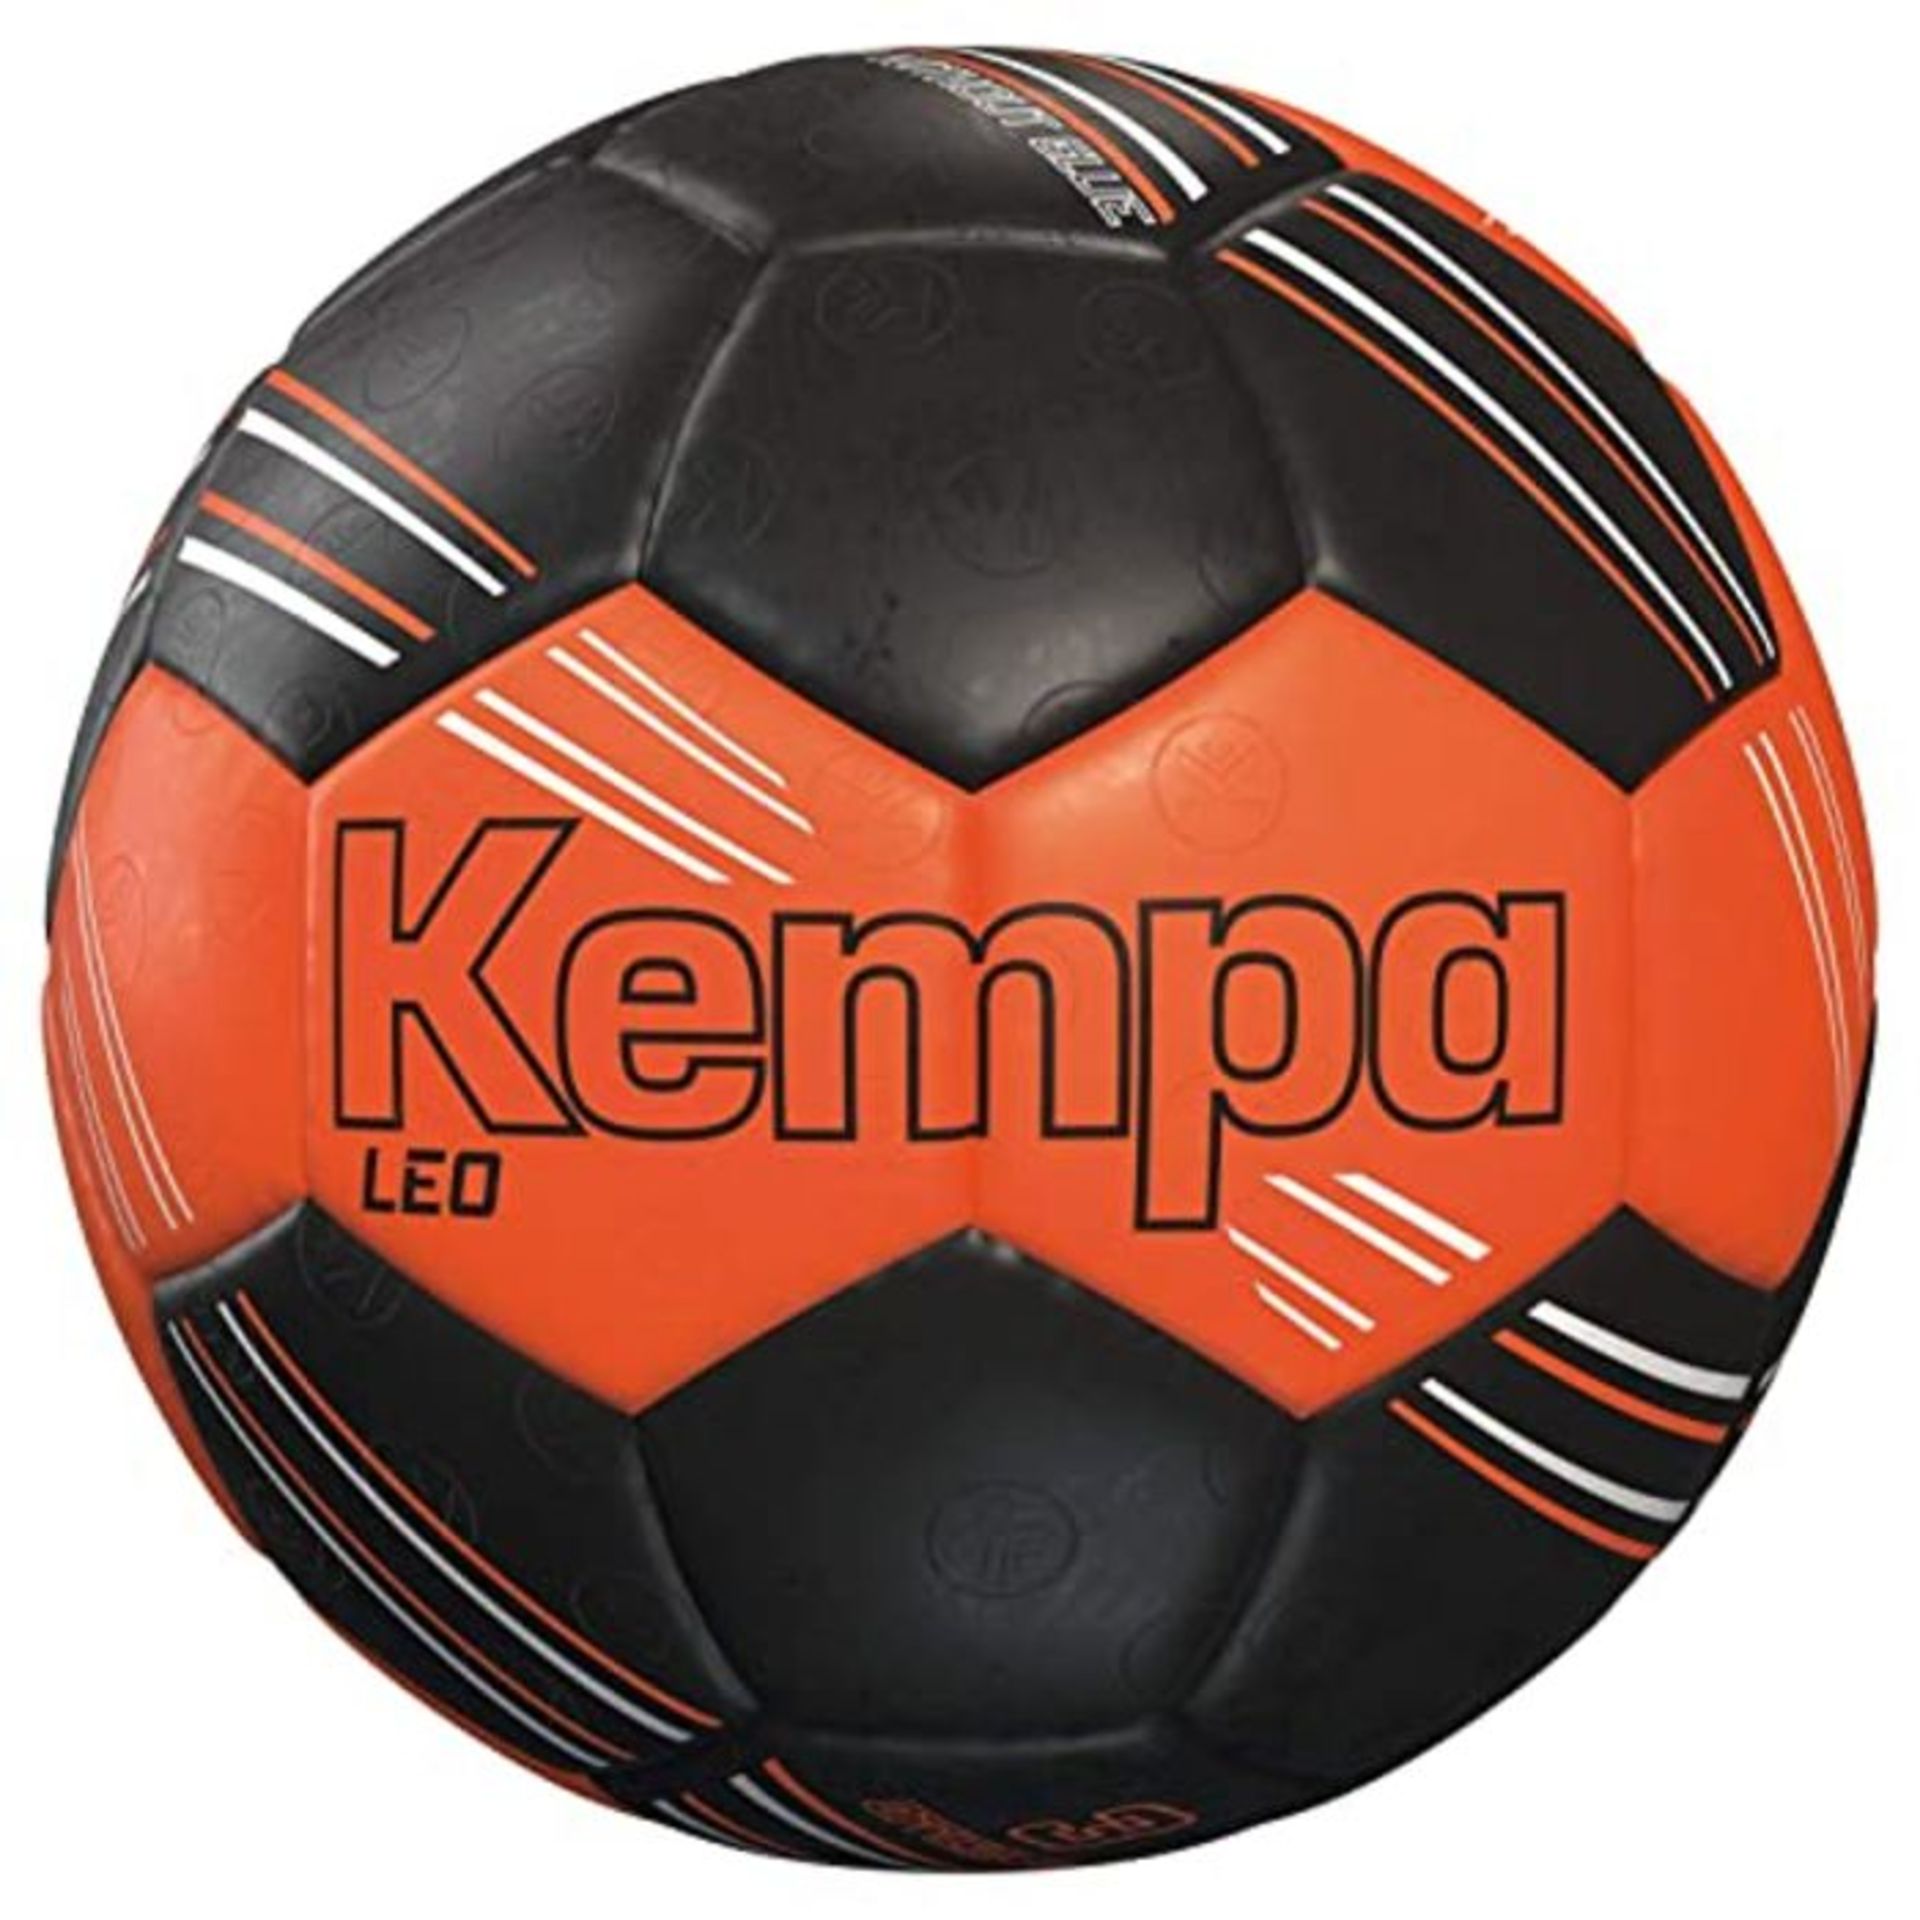 Kempa Handball Leo 200189201 orange/schwarz 2